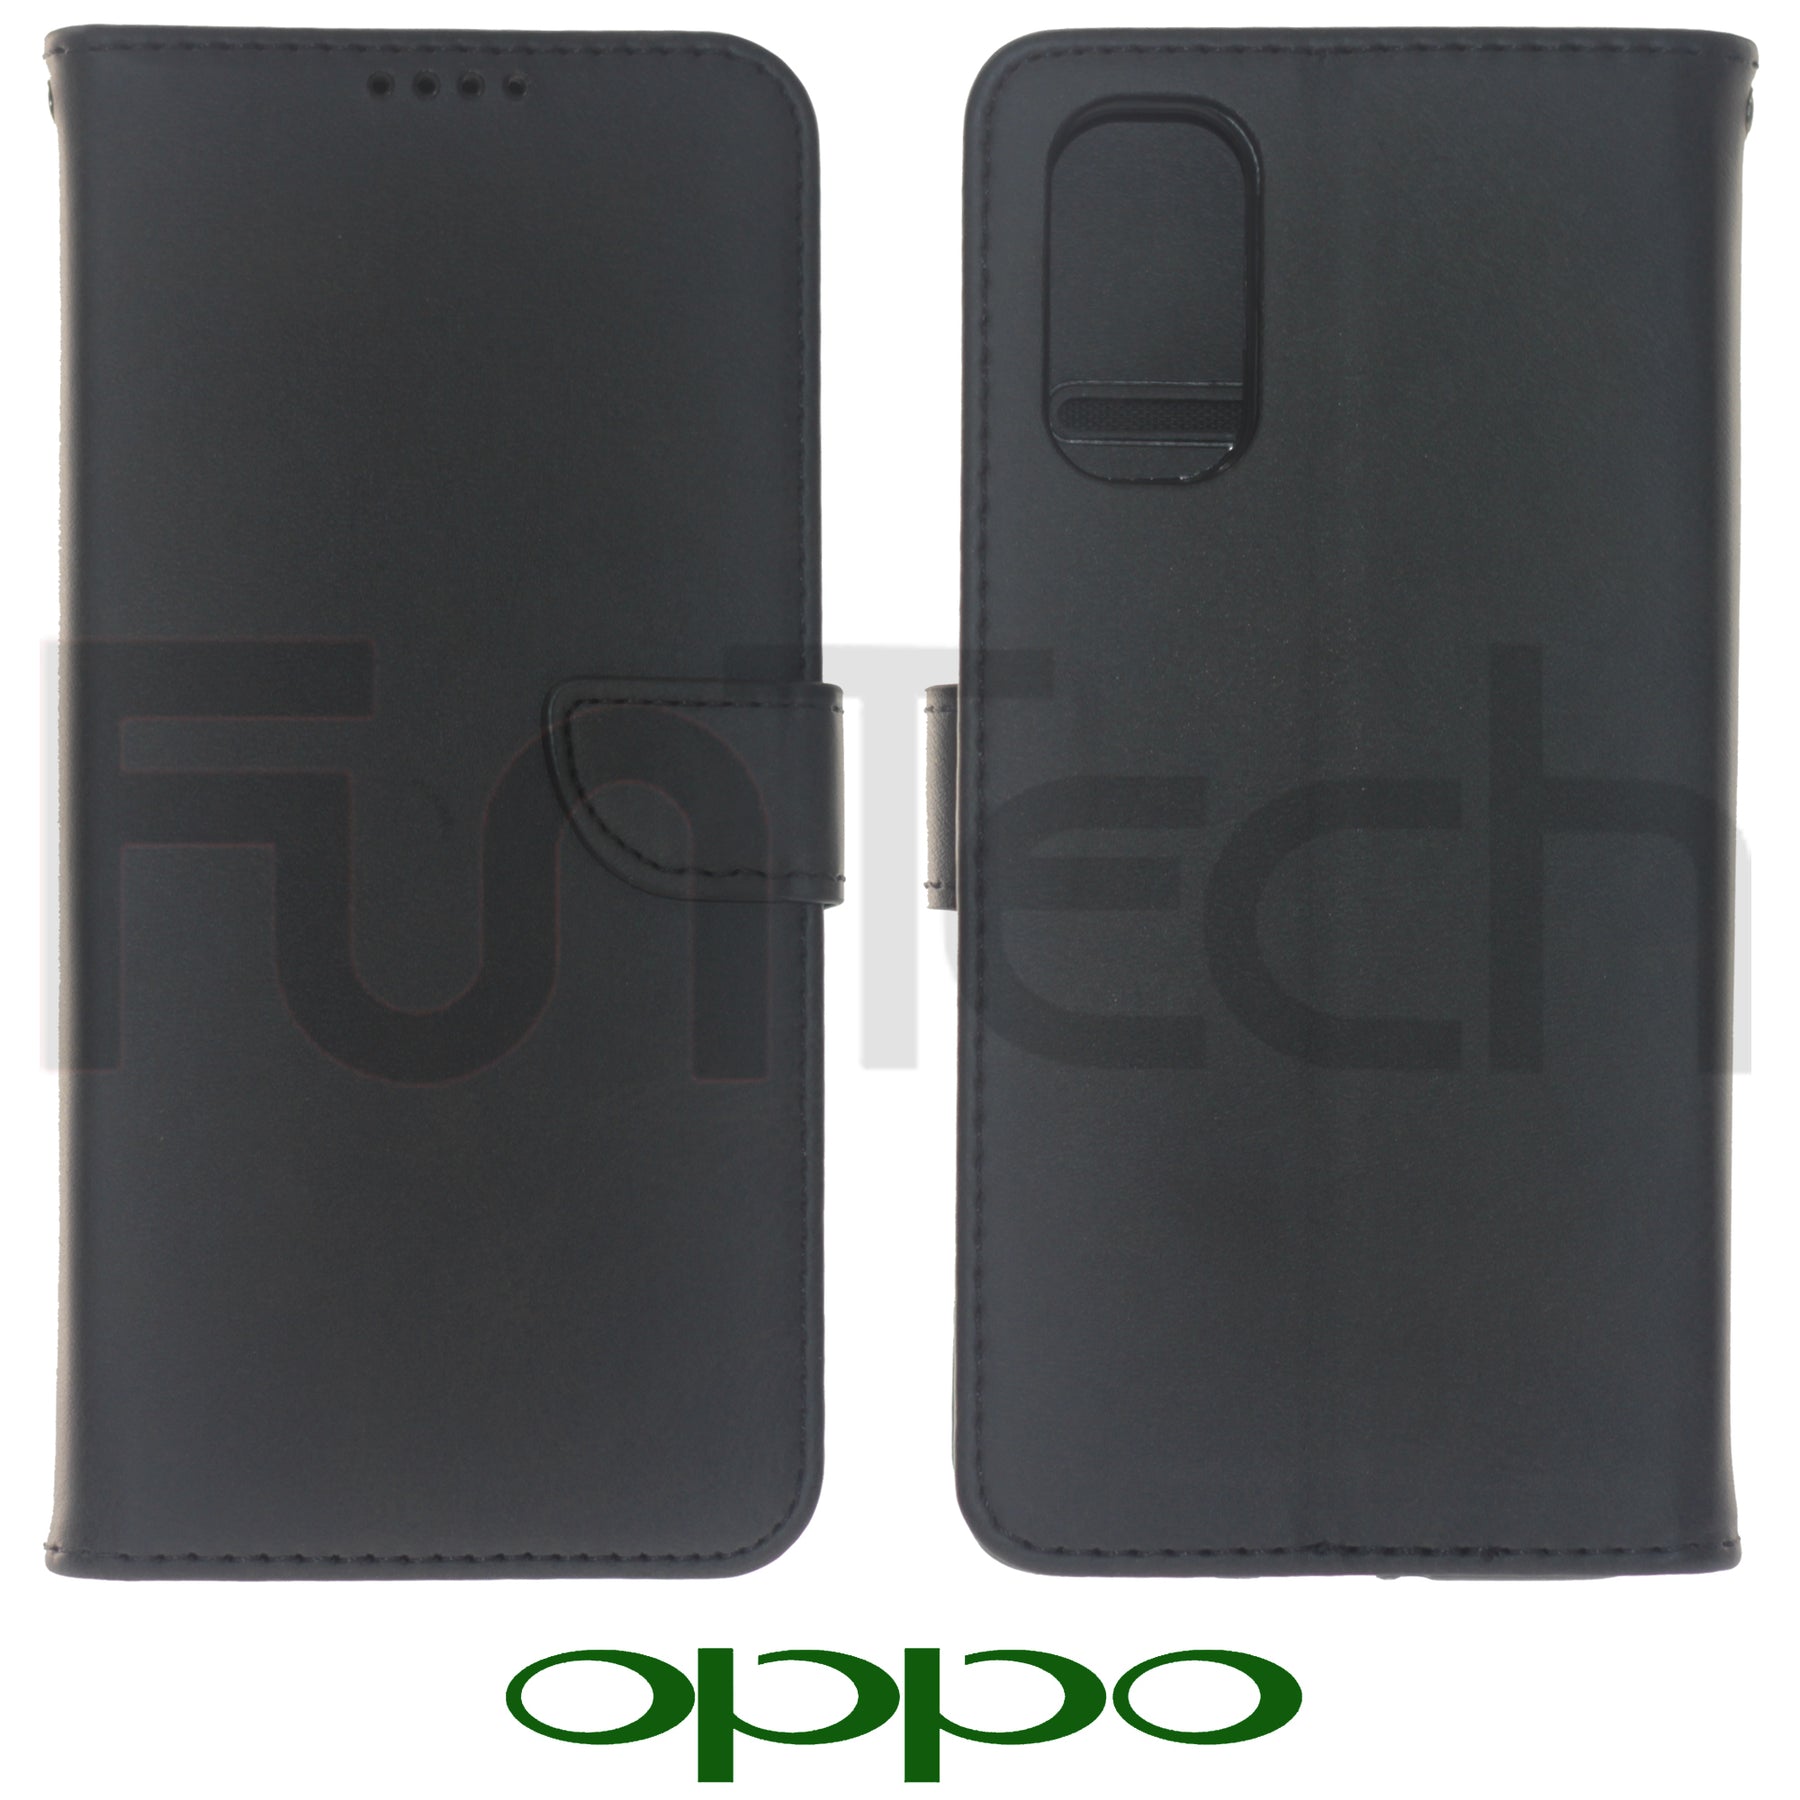 Oppo Reno 4 Pro 5G Lite, Leather Wallet Case, Color Black.